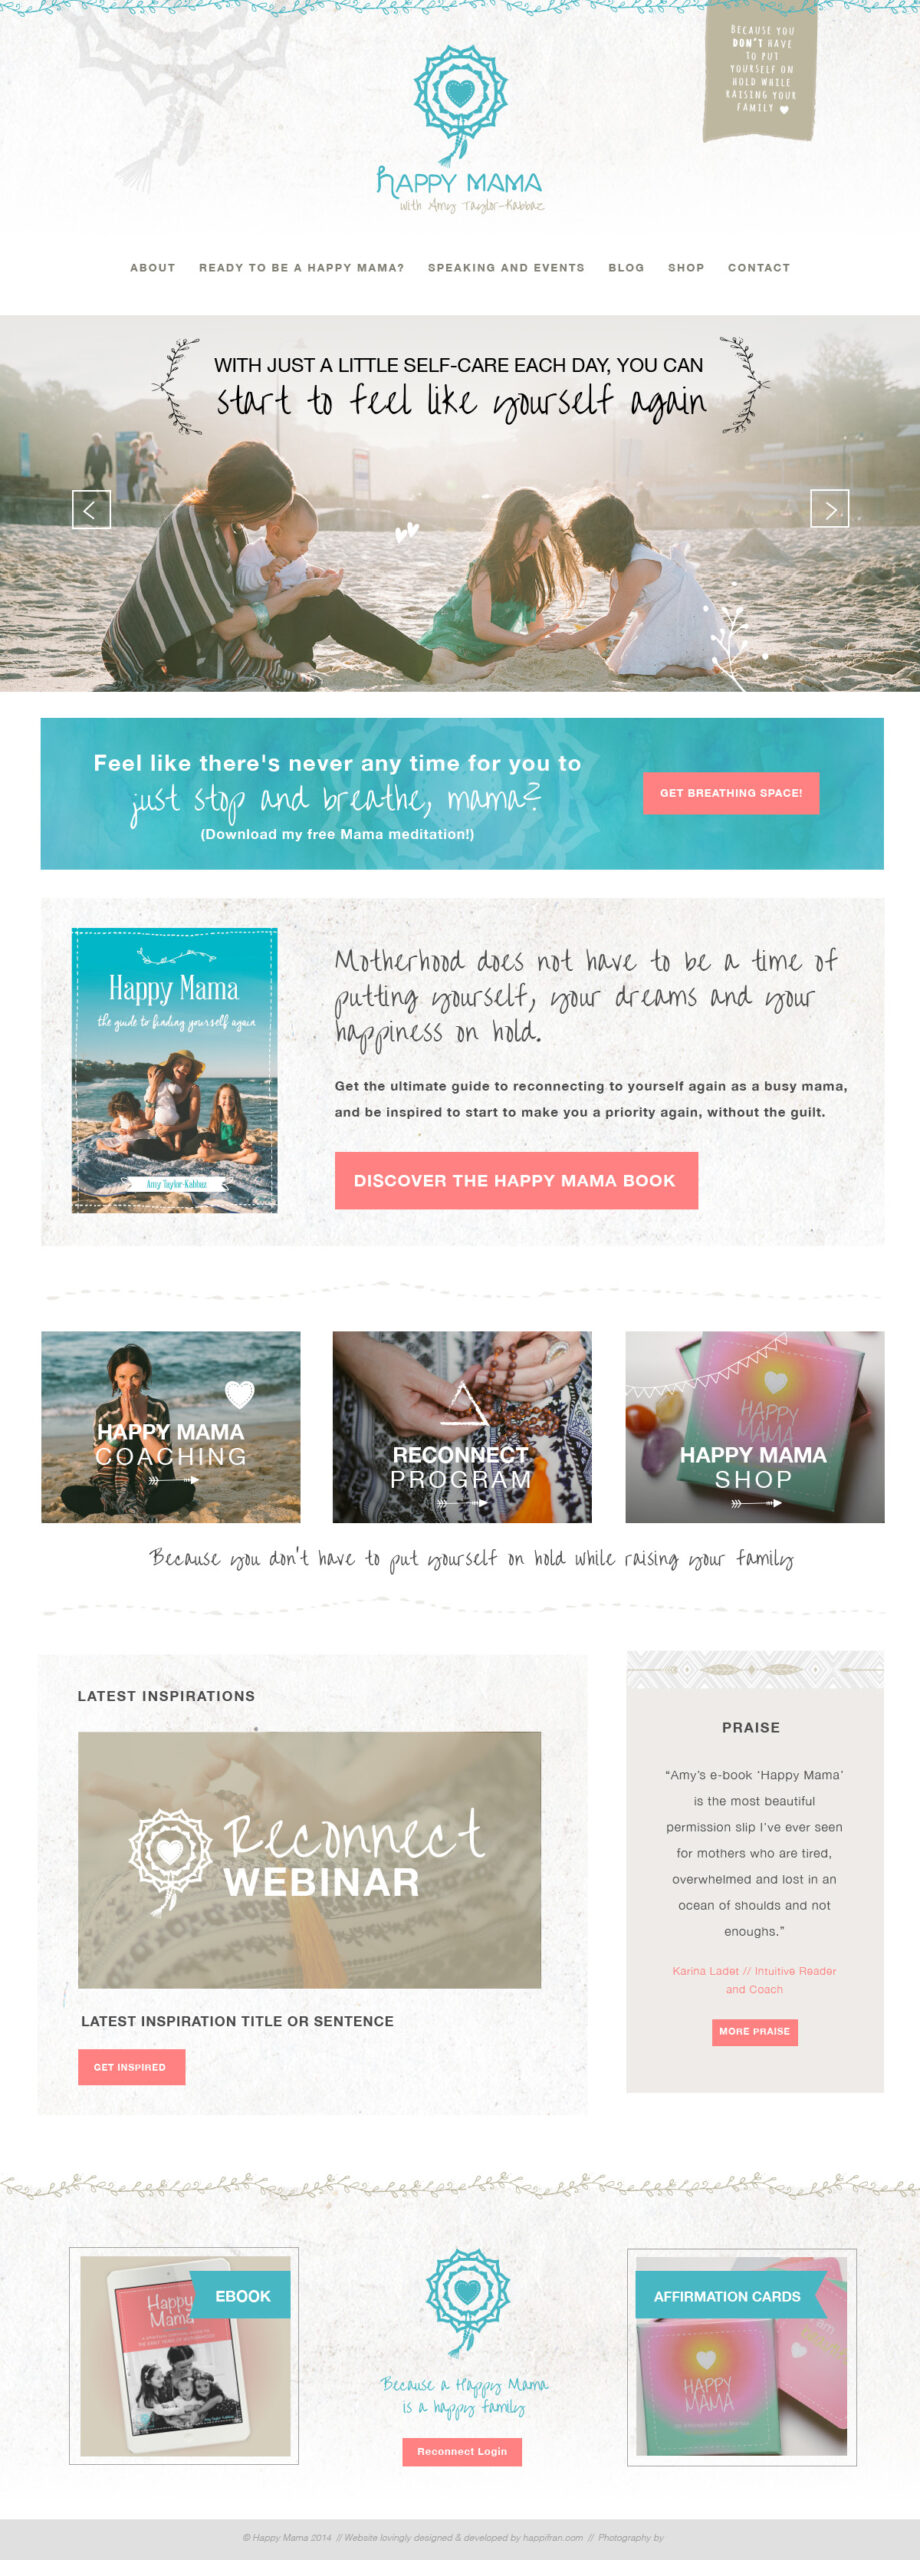 Happy Mama website design by Frances Verbeek